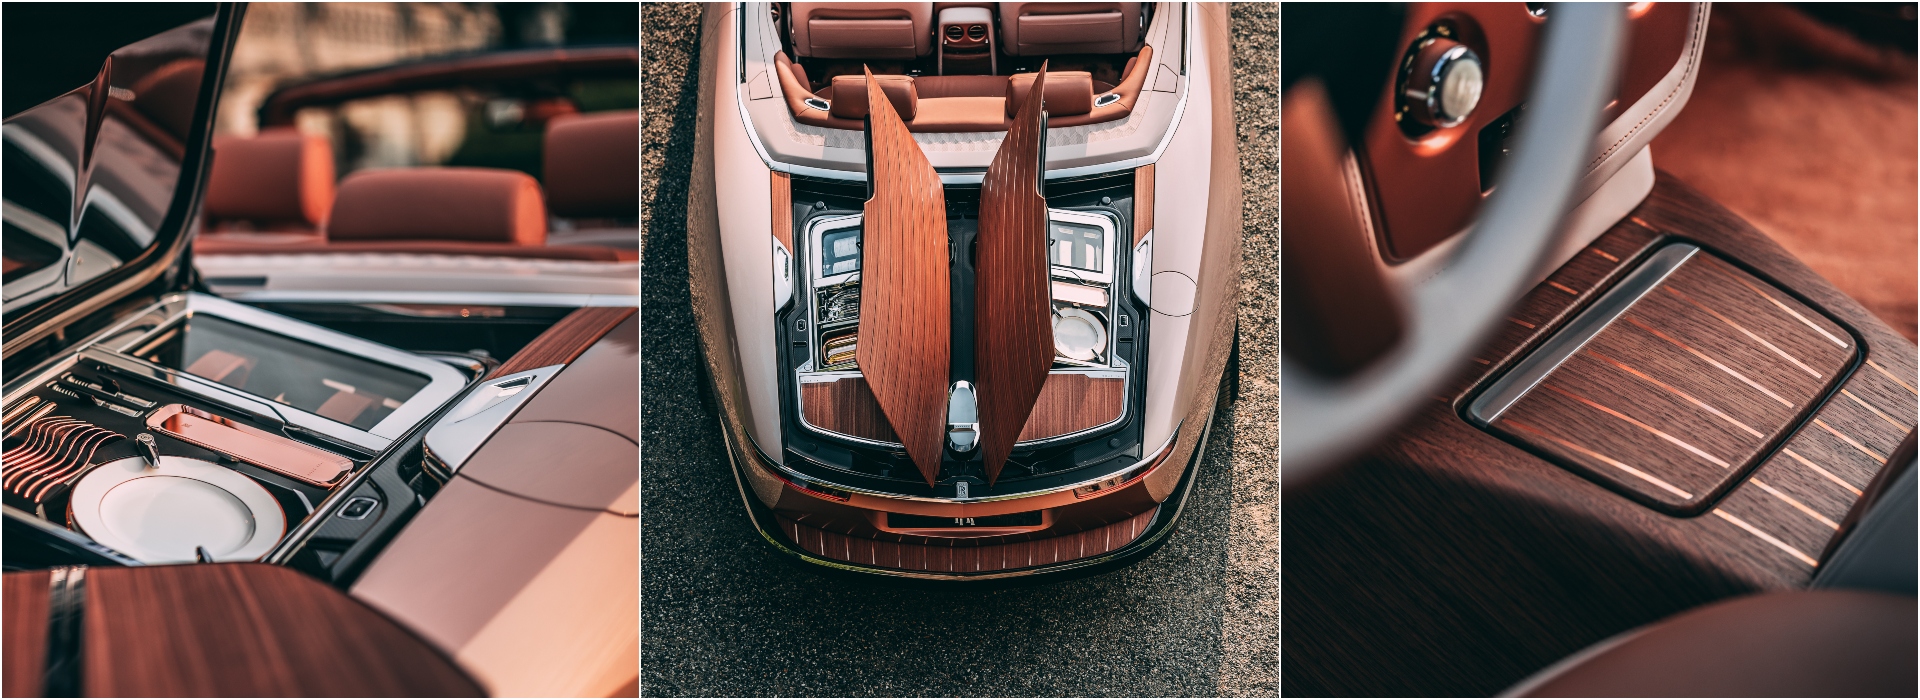 Rolls Royce unikatni Boat Tail model